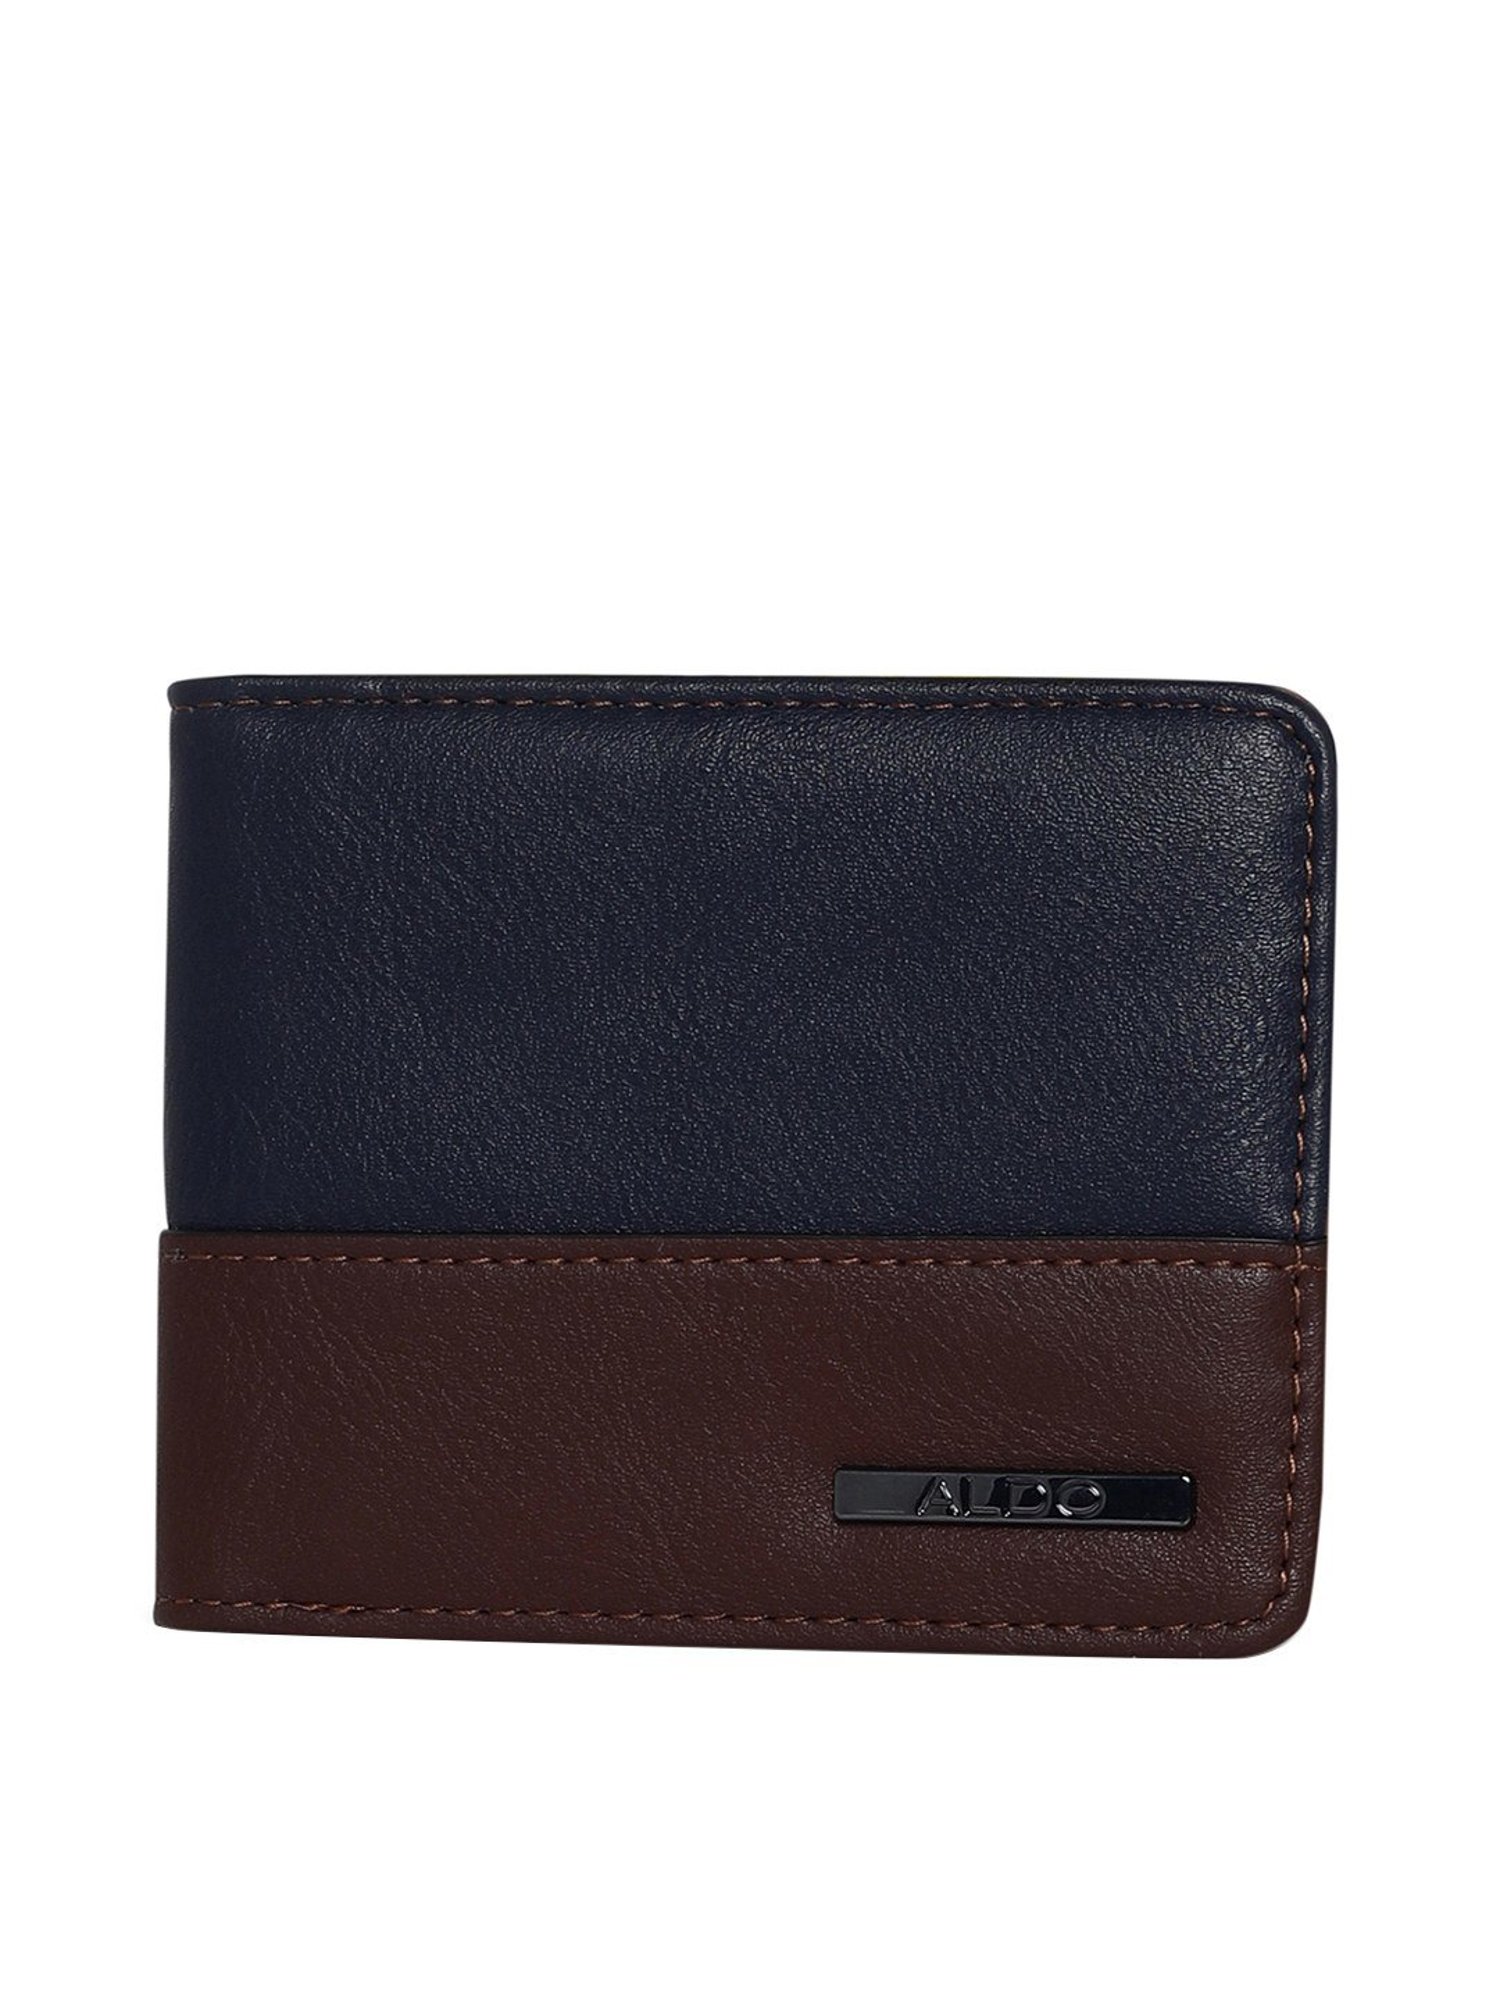 Buy Aldo Navy & Brown Bi-Fold Wallet for Men Online Best Price @ Tata CLiQ